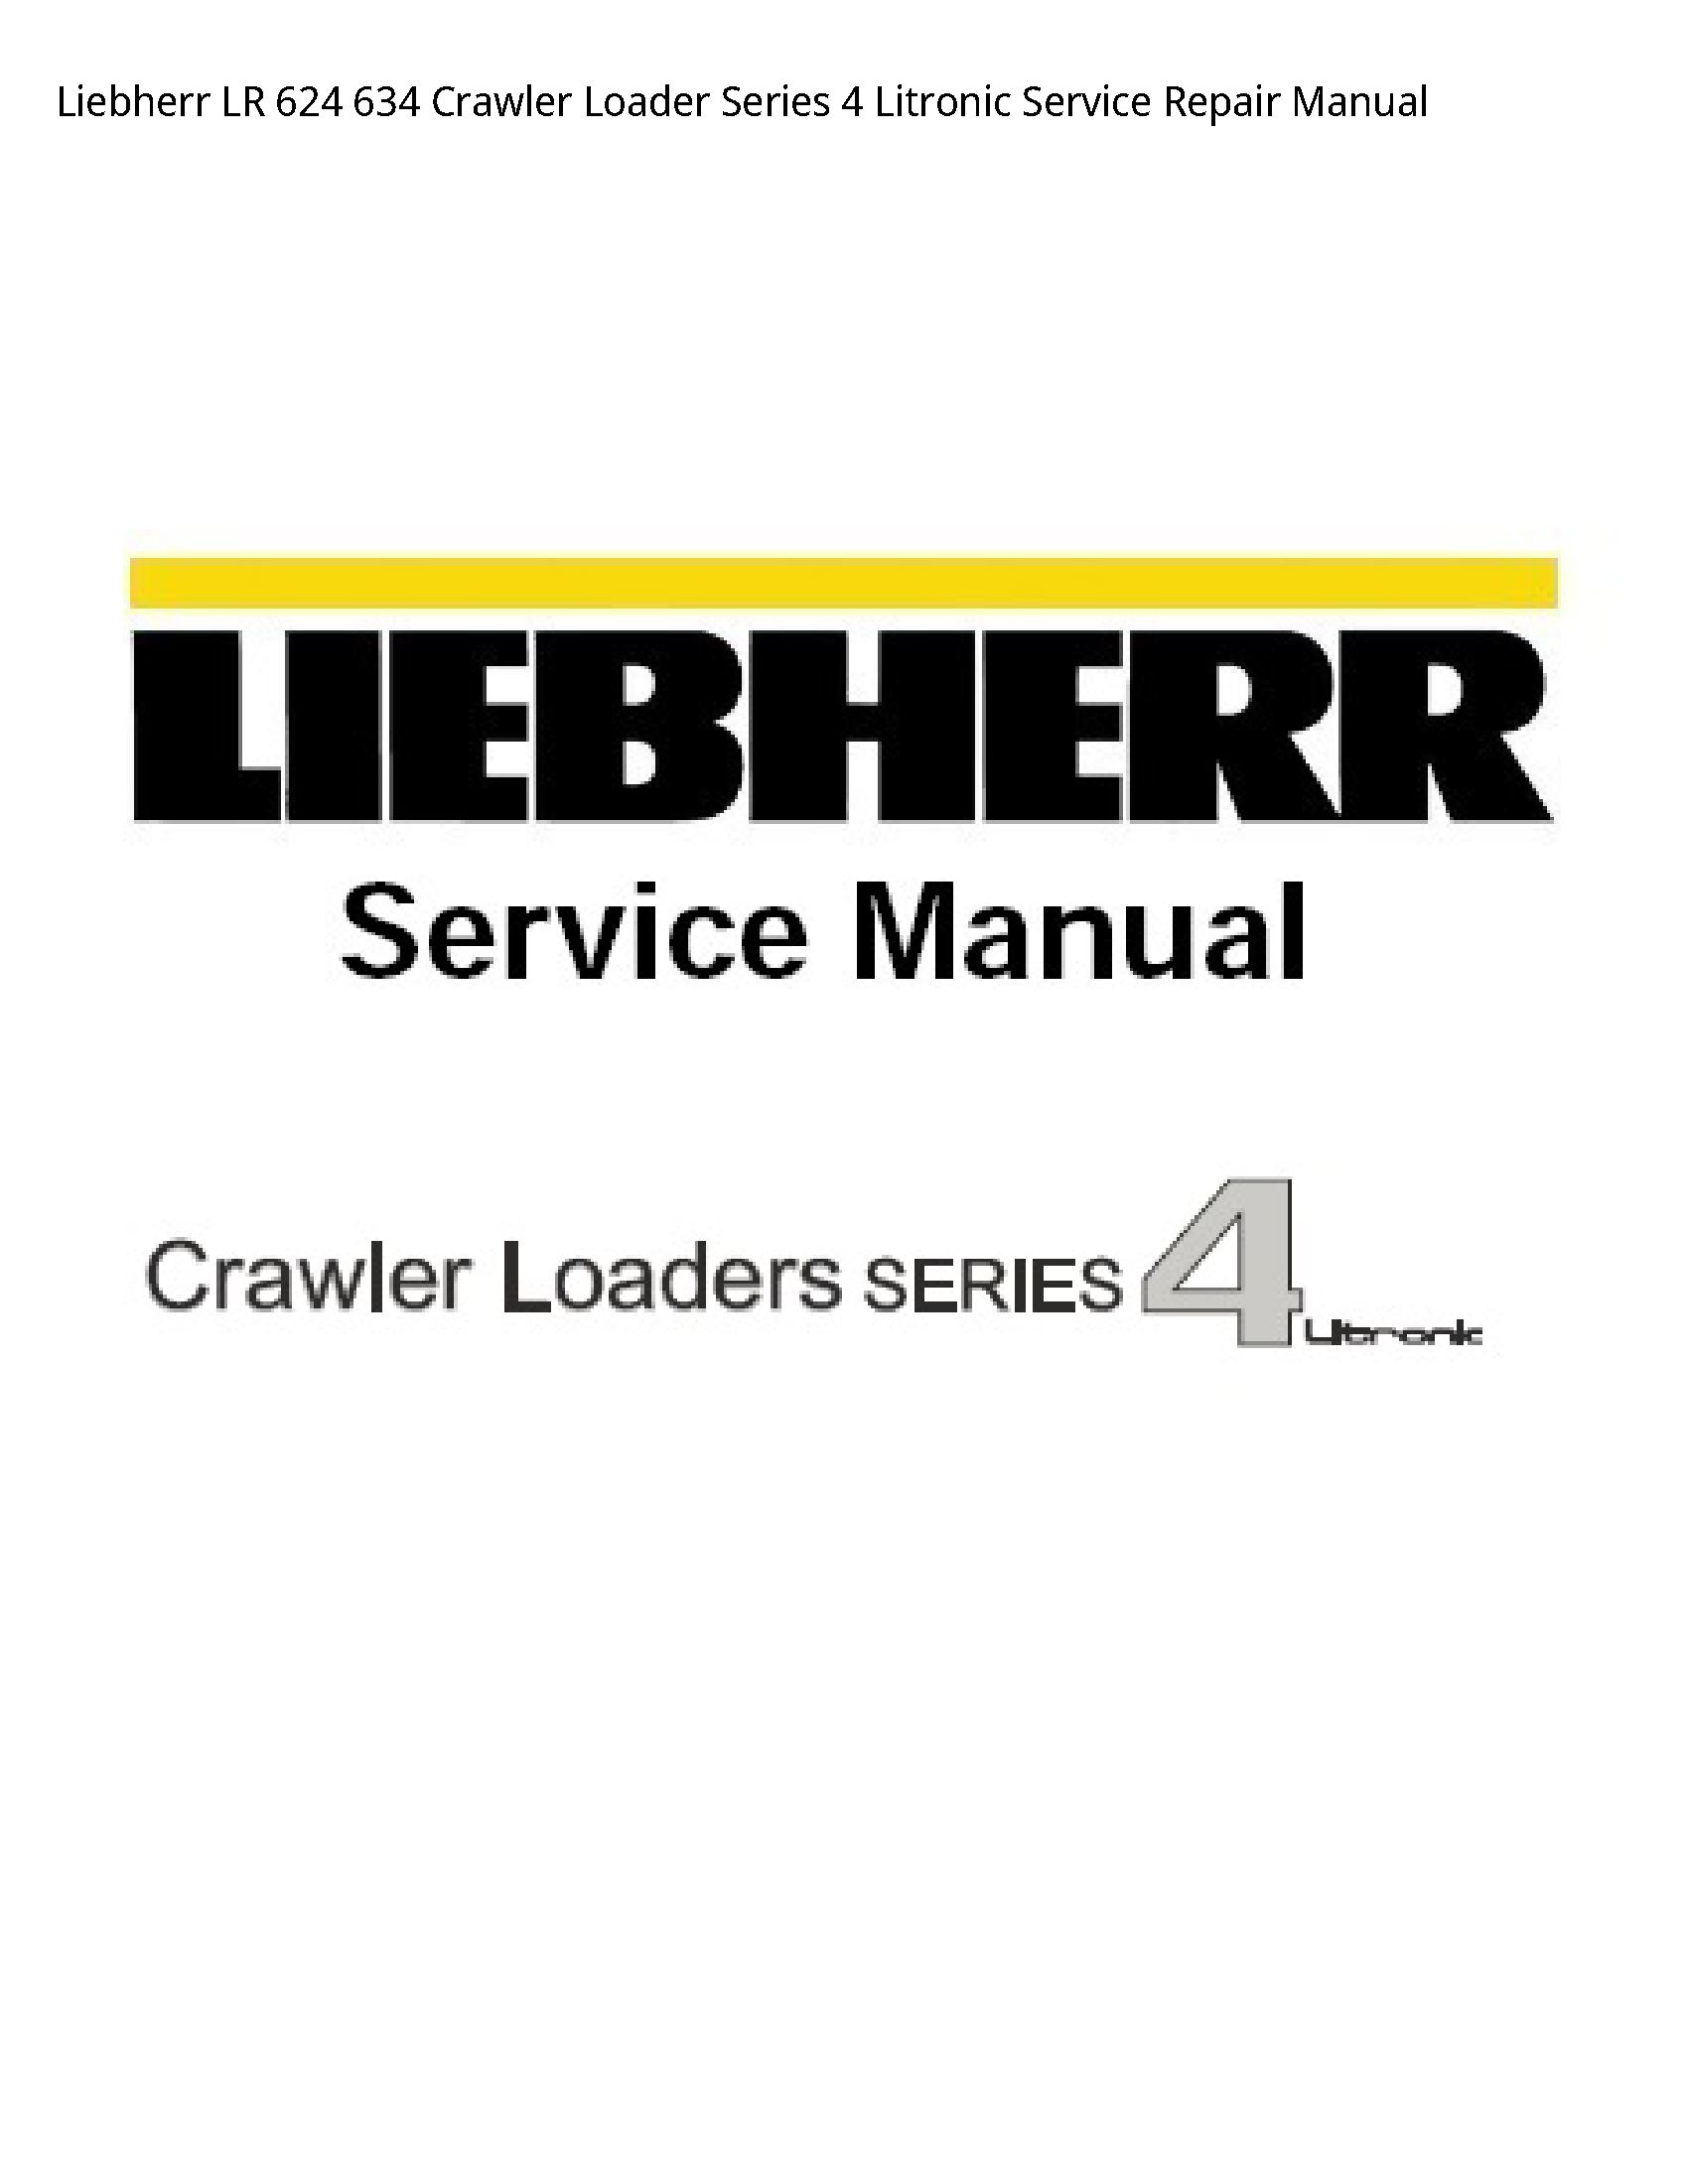 Liebherr 624 LR Crawler Loader Series Litronic manual